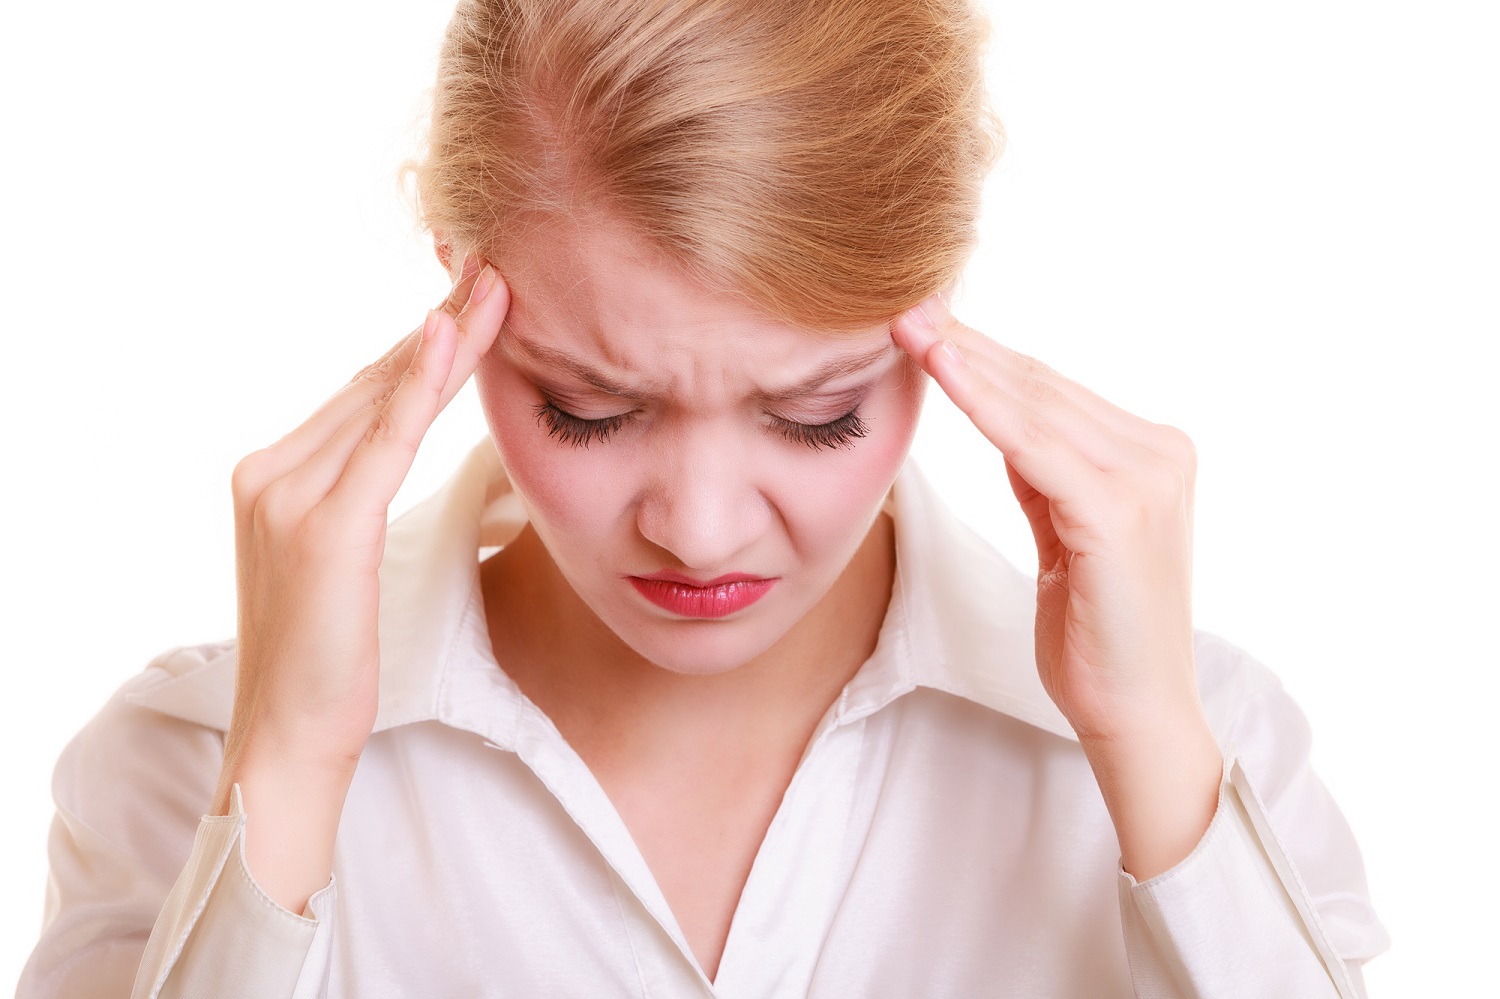 Great news ketamine may help treat migraines